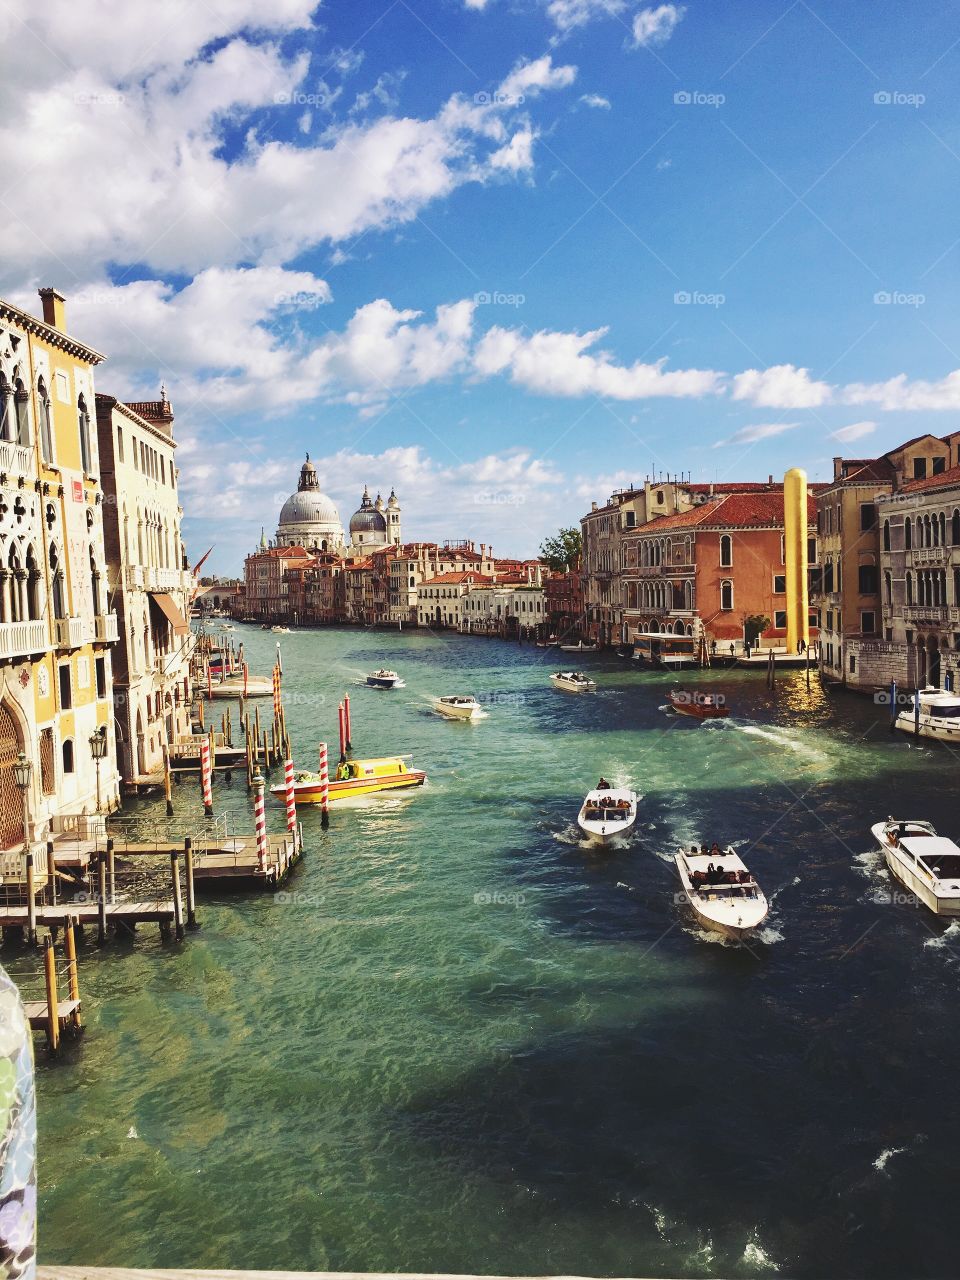 Postcard memories from Venice 